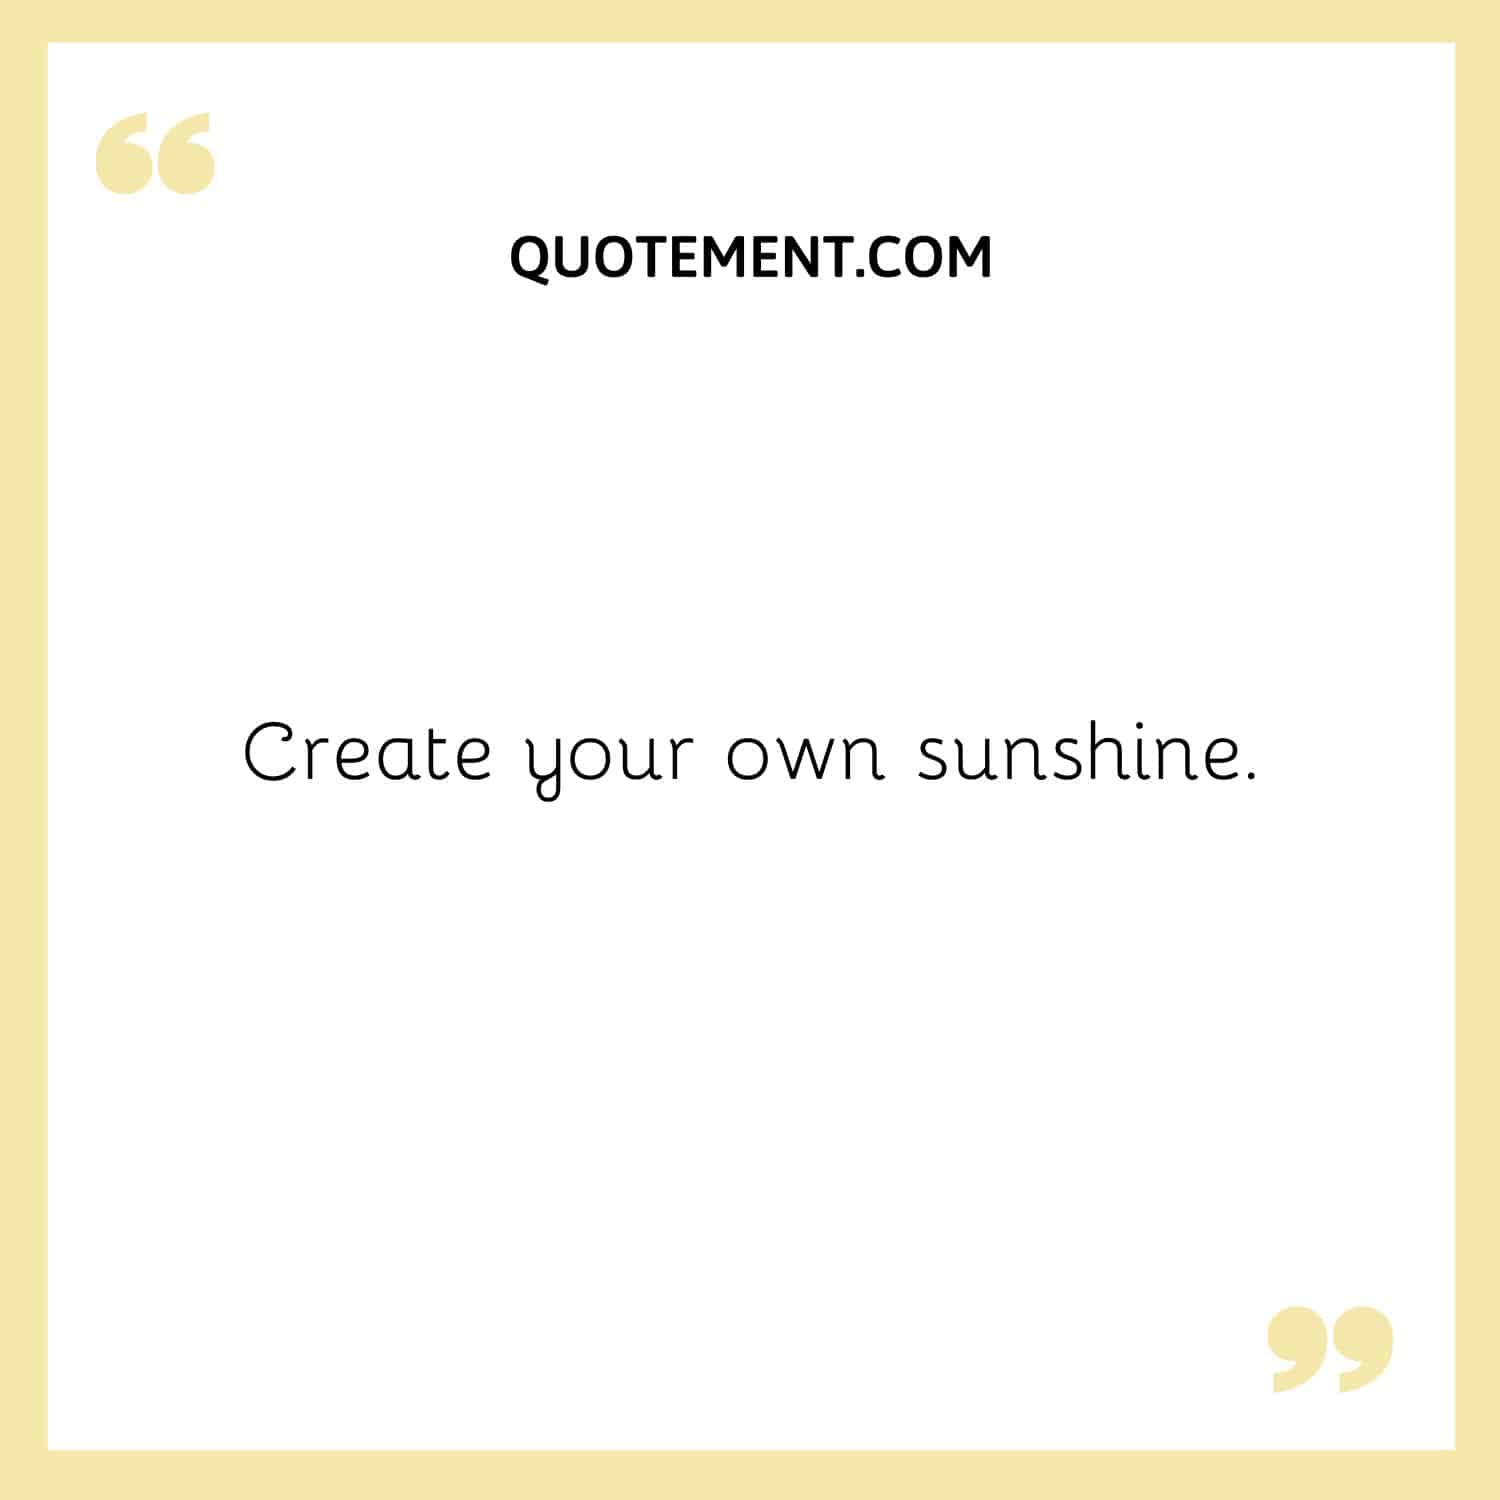 Create your own sunshine.